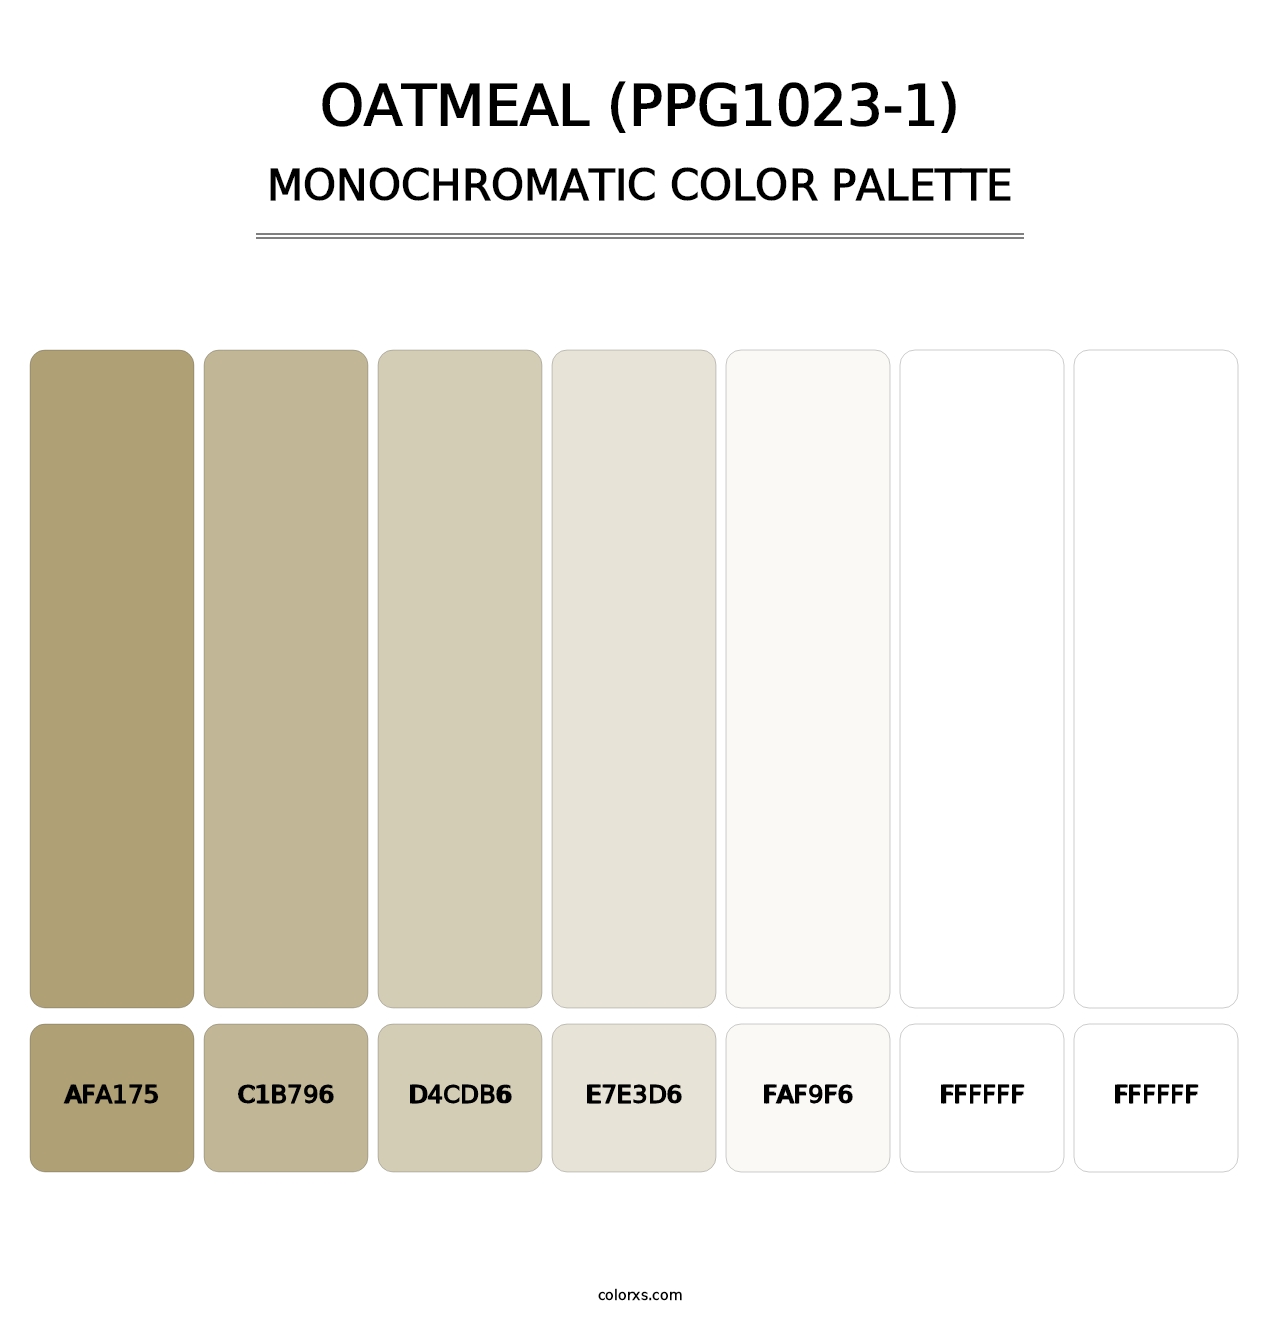 Oatmeal (PPG1023-1) - Monochromatic Color Palette